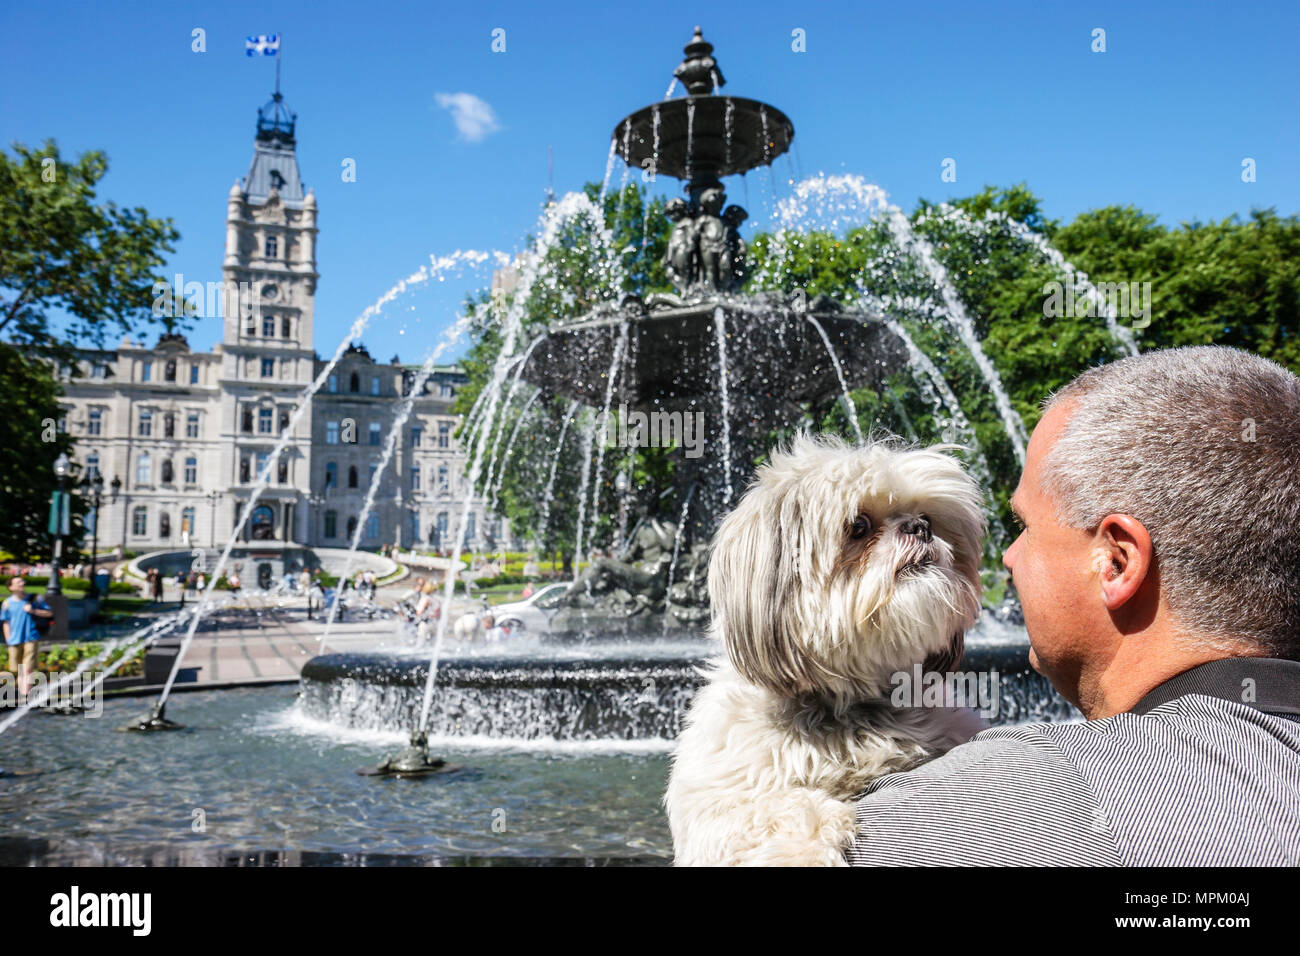 Quebec Canada,Avenue Honore Mercier,public fountain,Parliament building,Hotel de Parlement,dog,pet,canine,animal,water,Canada070712031 Stock Photo